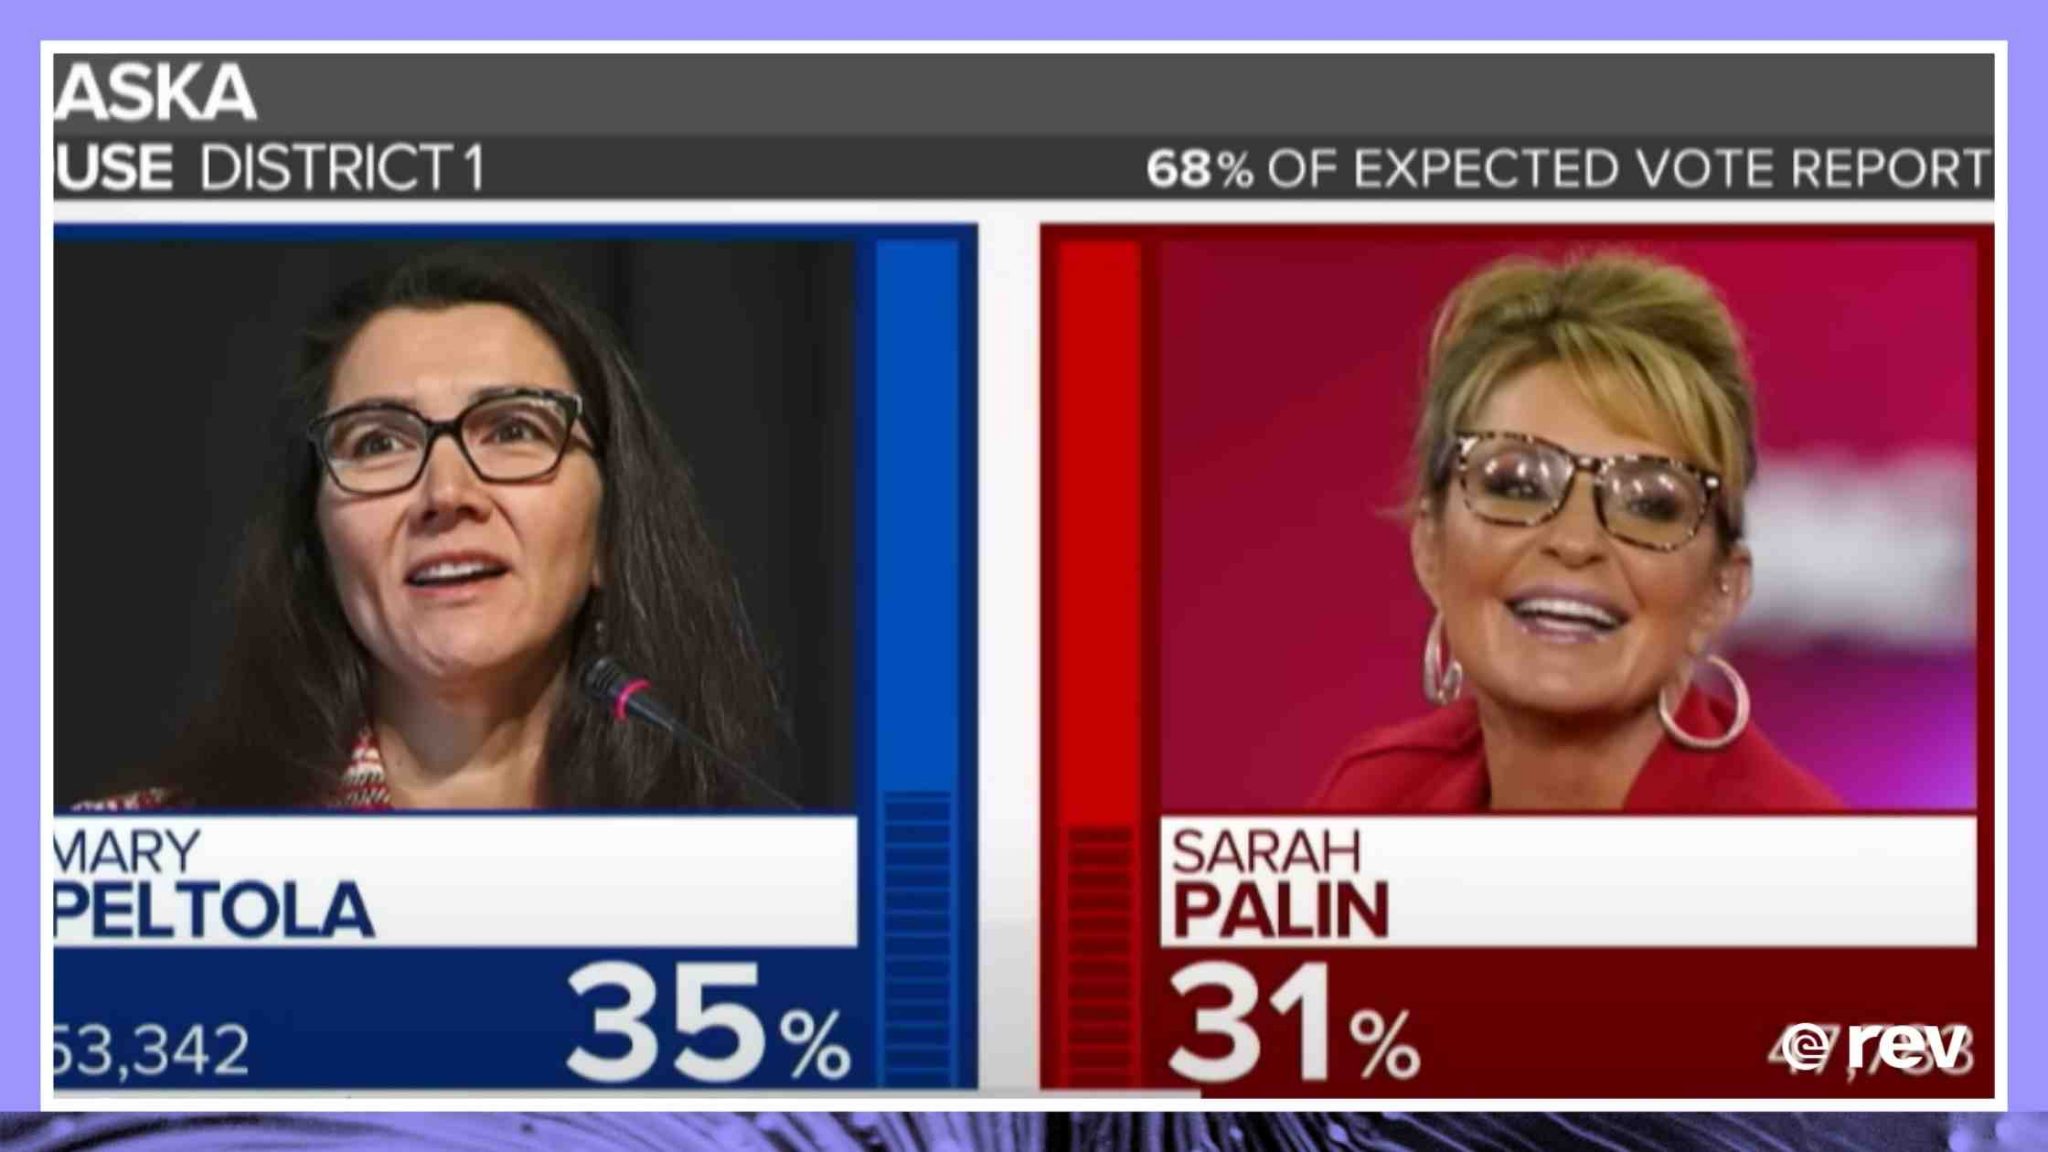 Sarah Palin advances to general election in Alaska congressional race Transcript